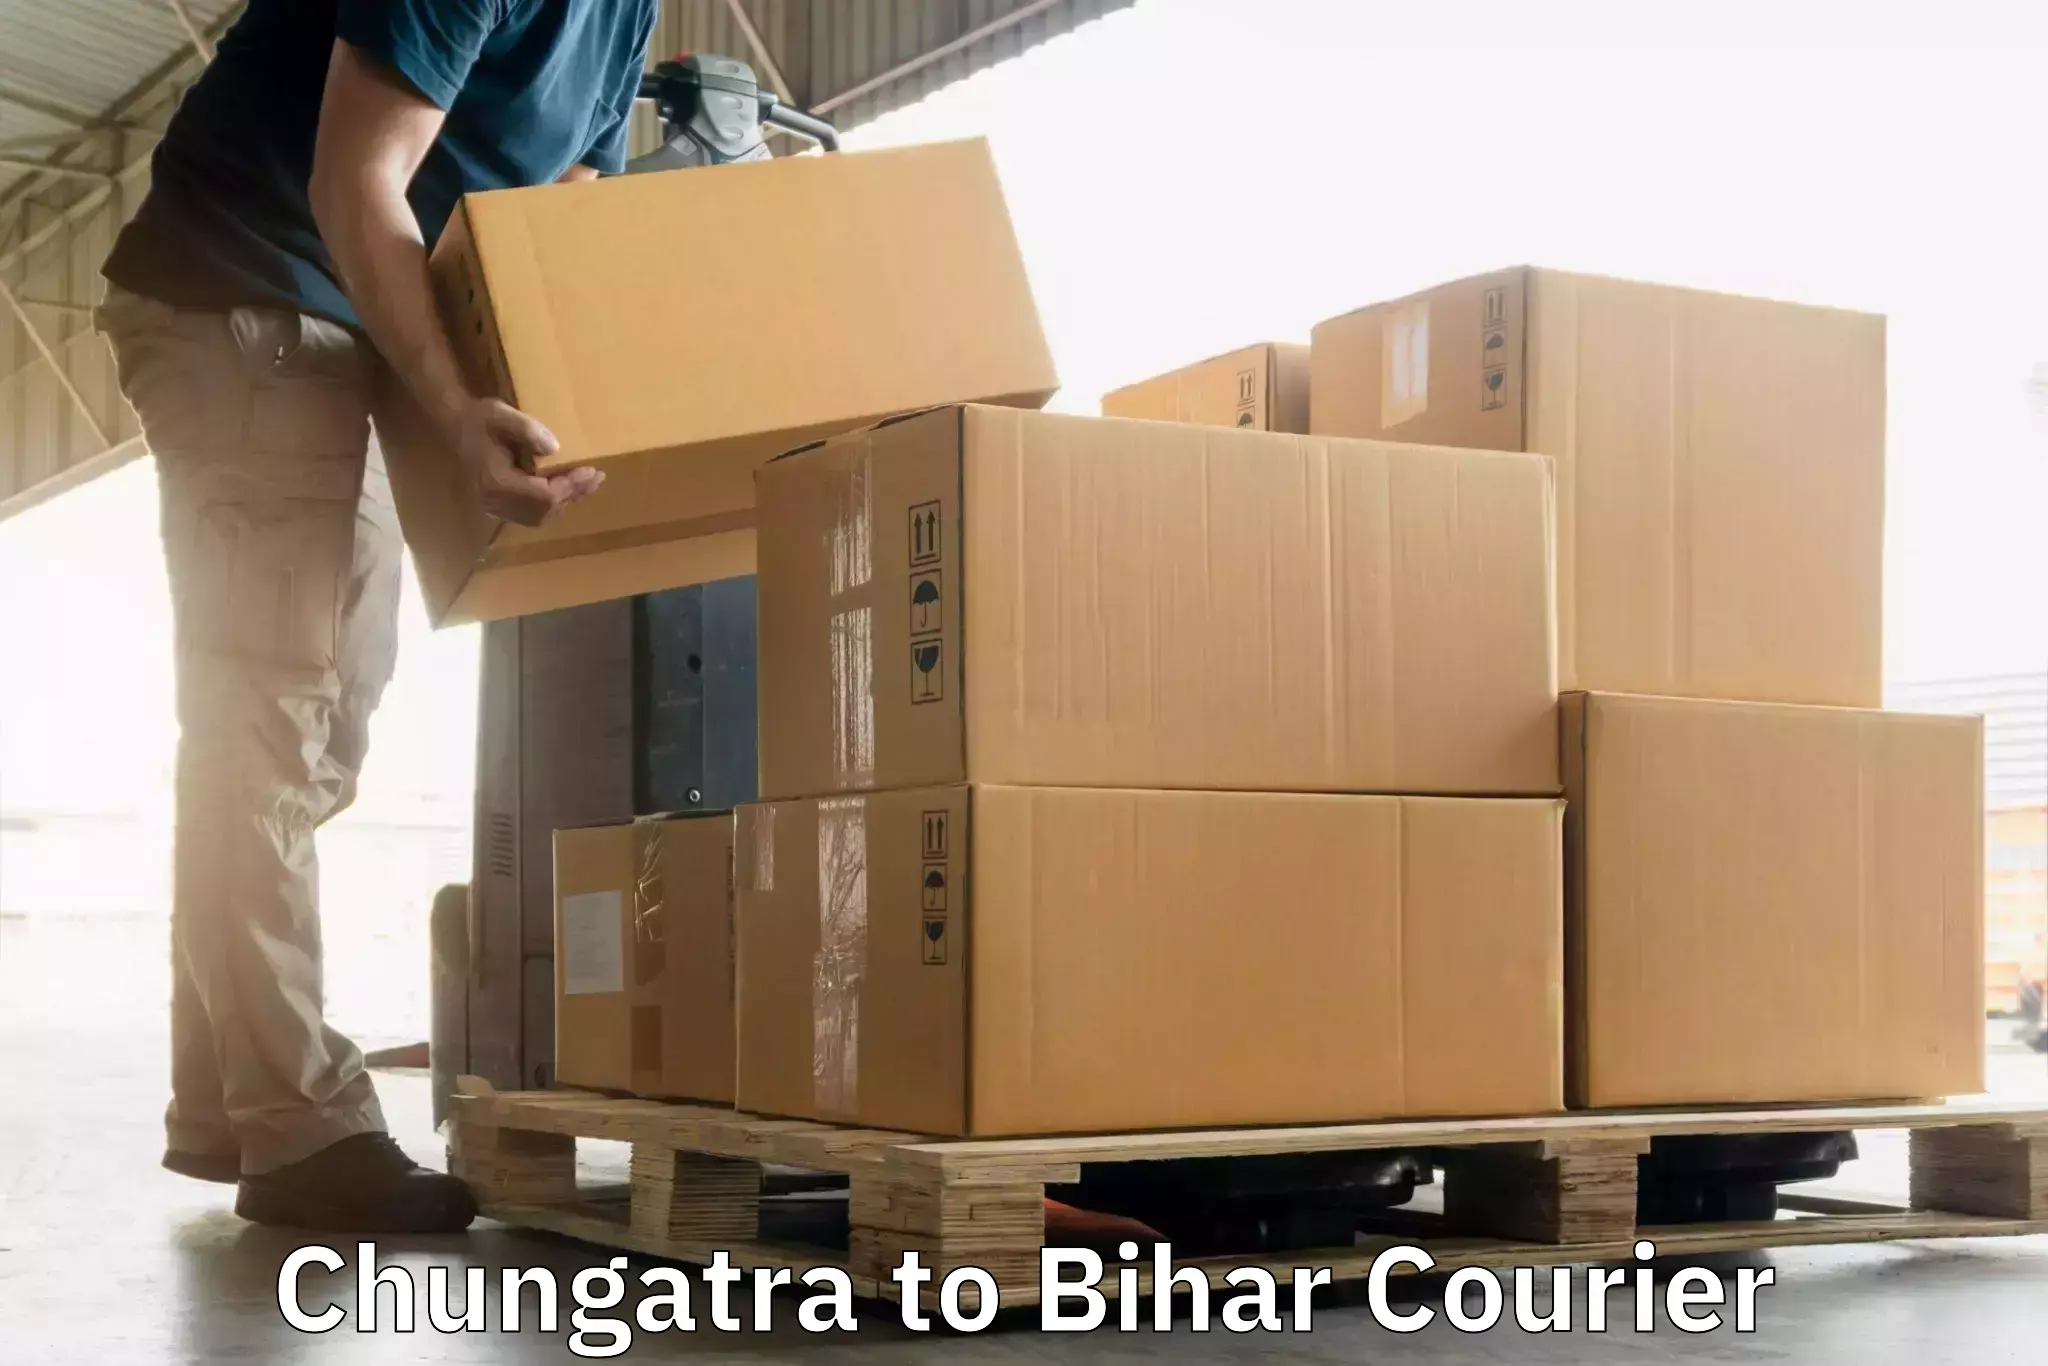 Express delivery capabilities Chungatra to Bihar